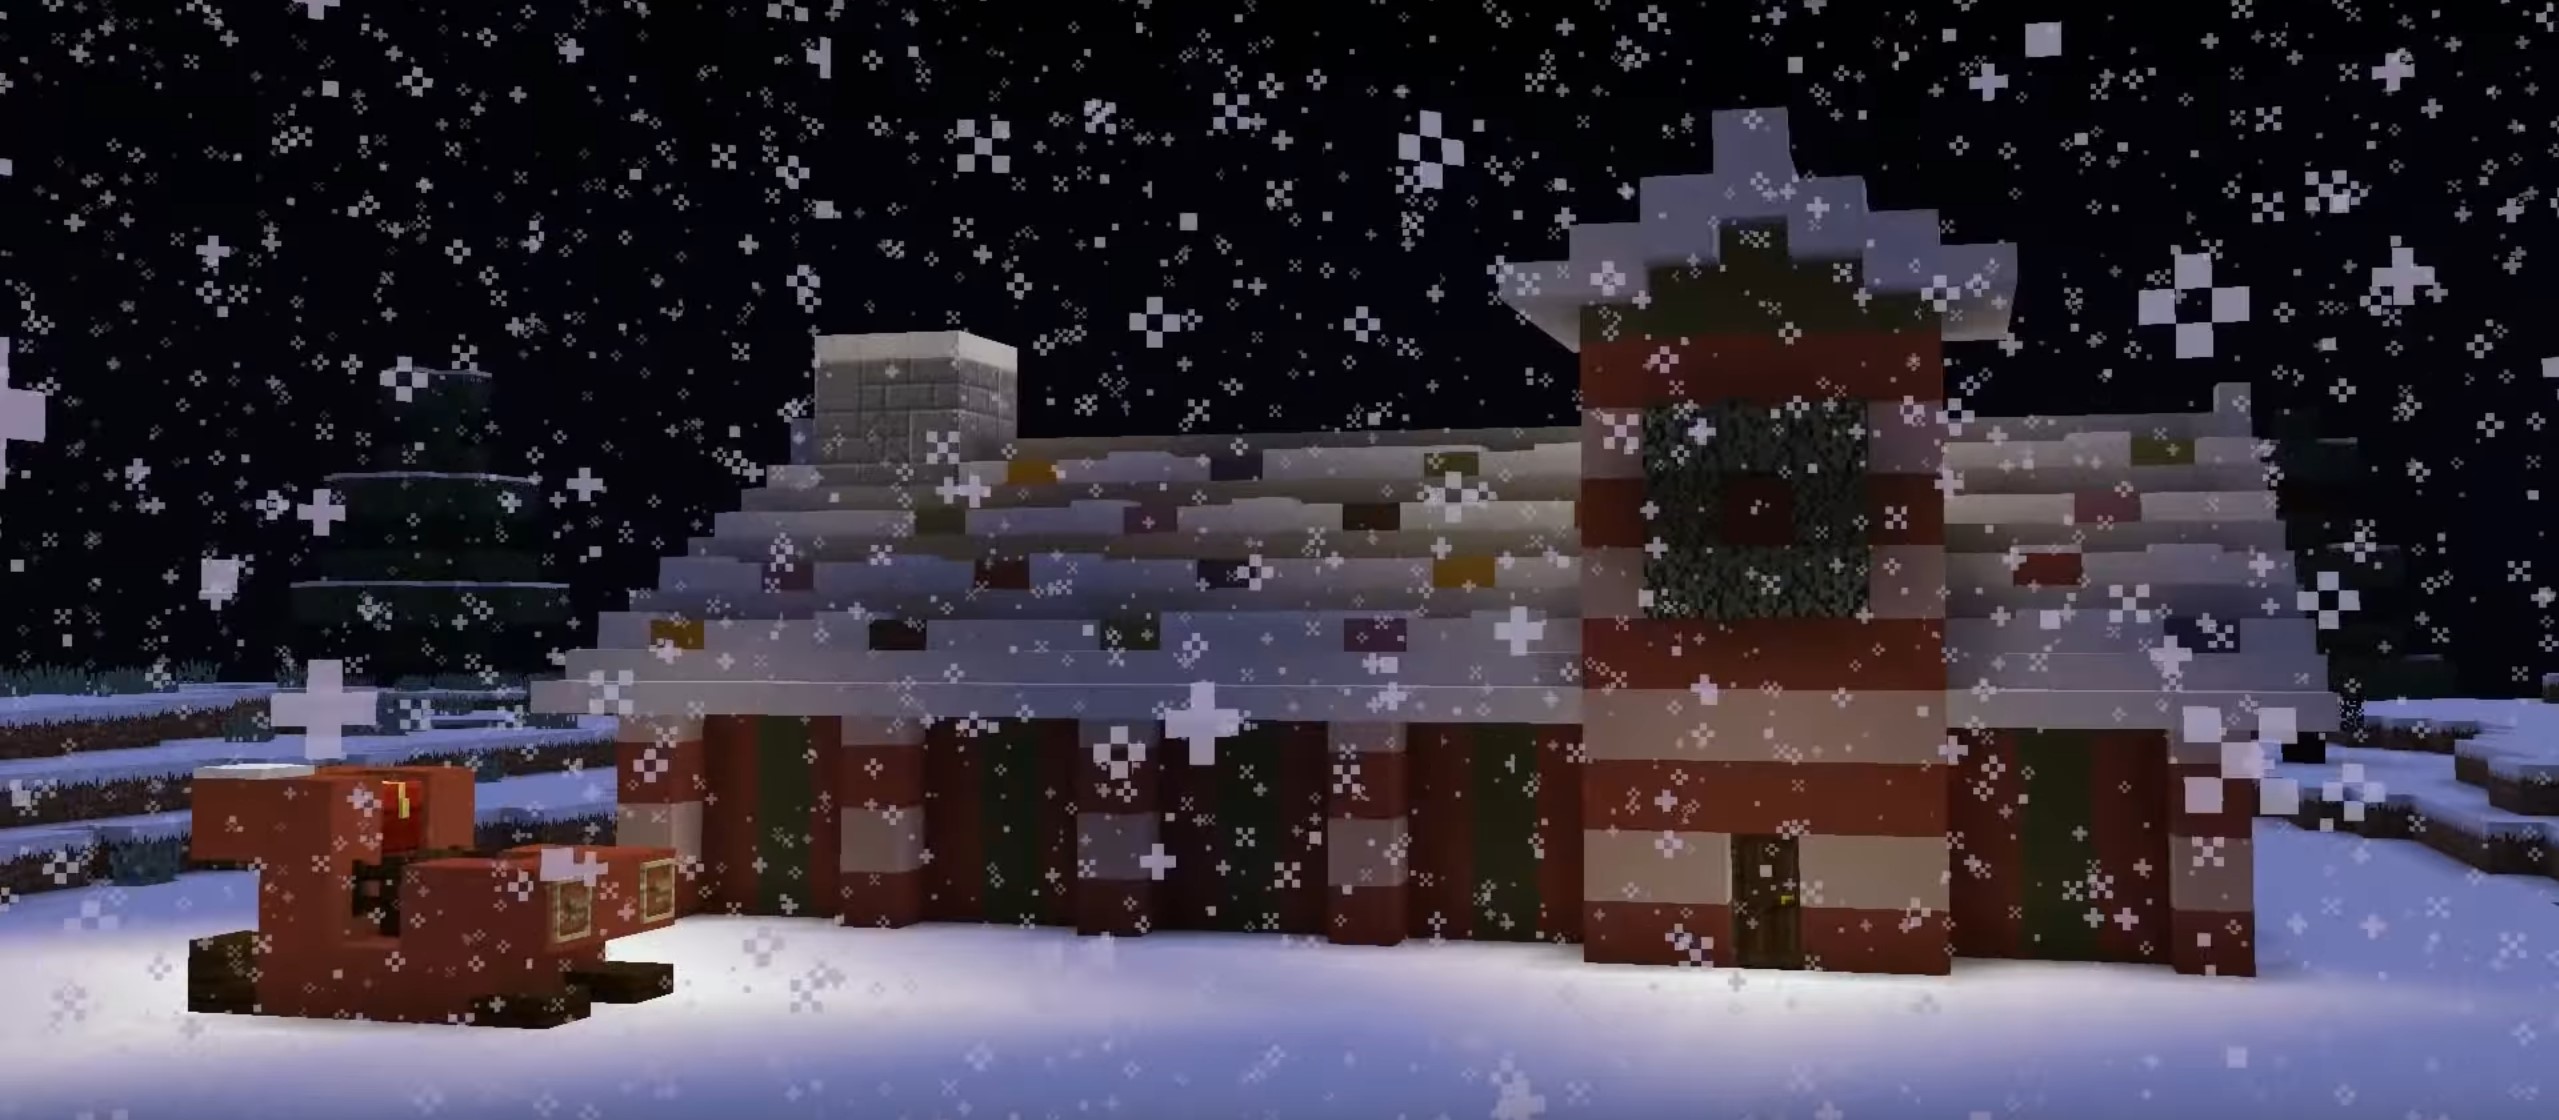 Minecraft Santa's Workshop idea